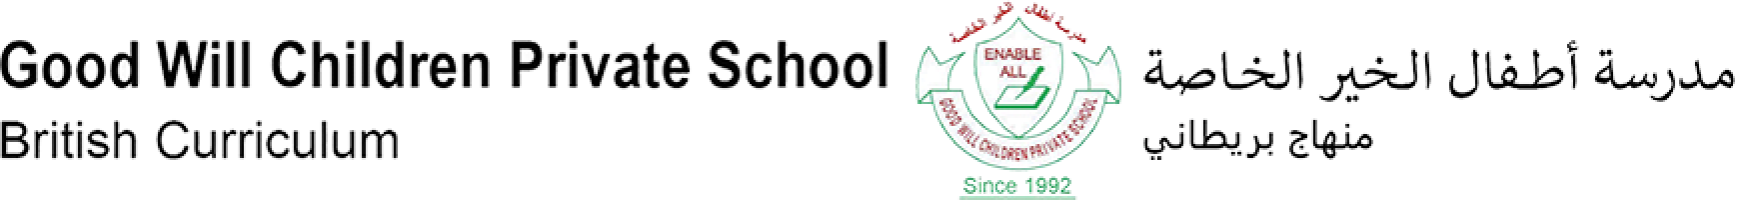 Good Will Children Private School Abu Dhabi logo (1)